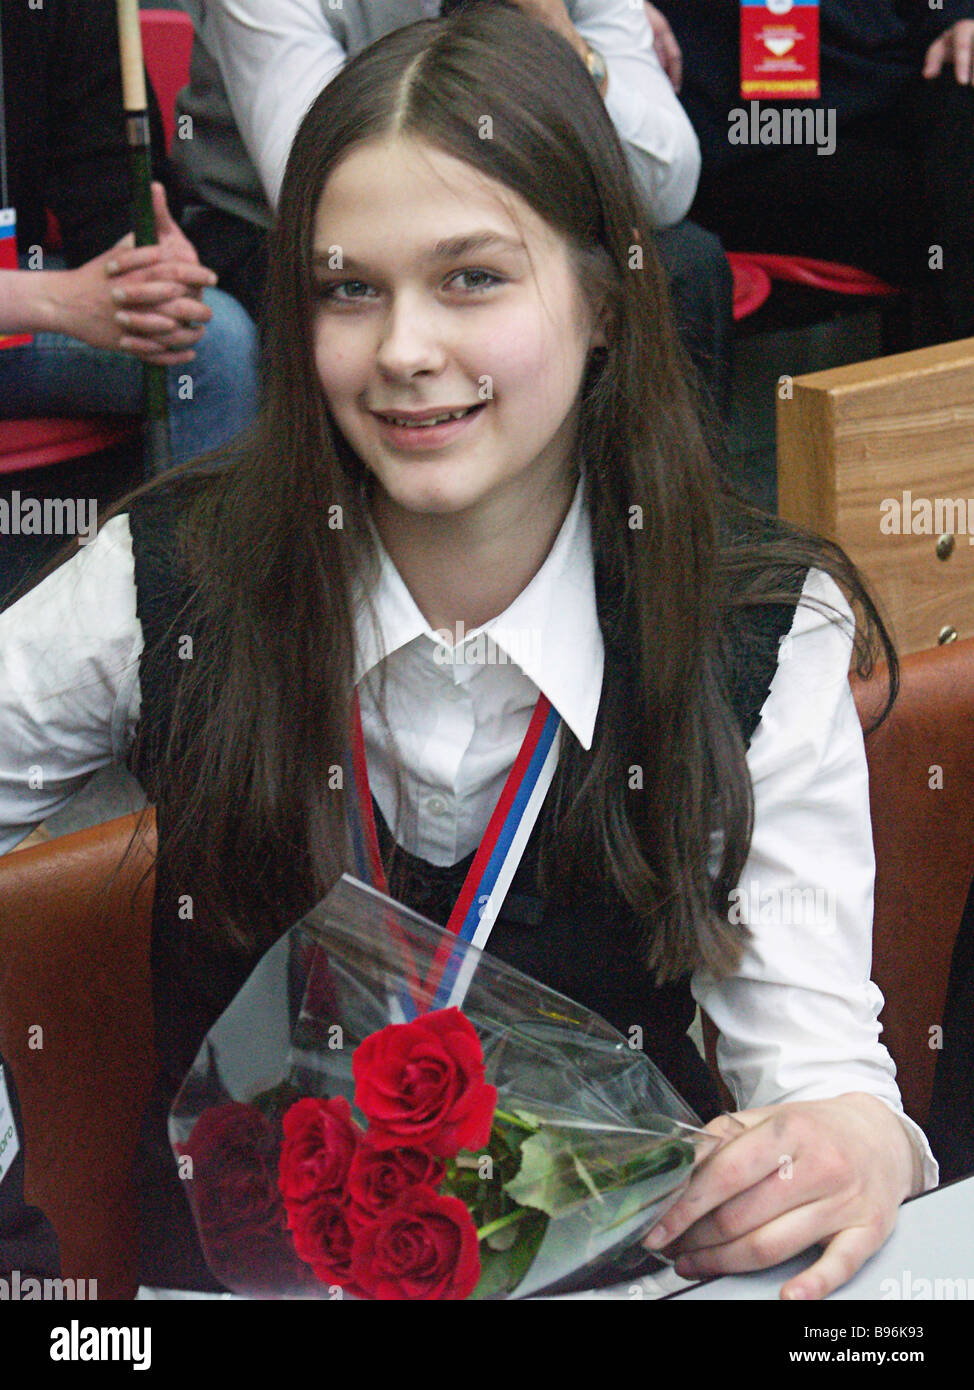 anastasia-luppova-winner-of-the-pyramid-russian-pool-championship-B96K93.jpg